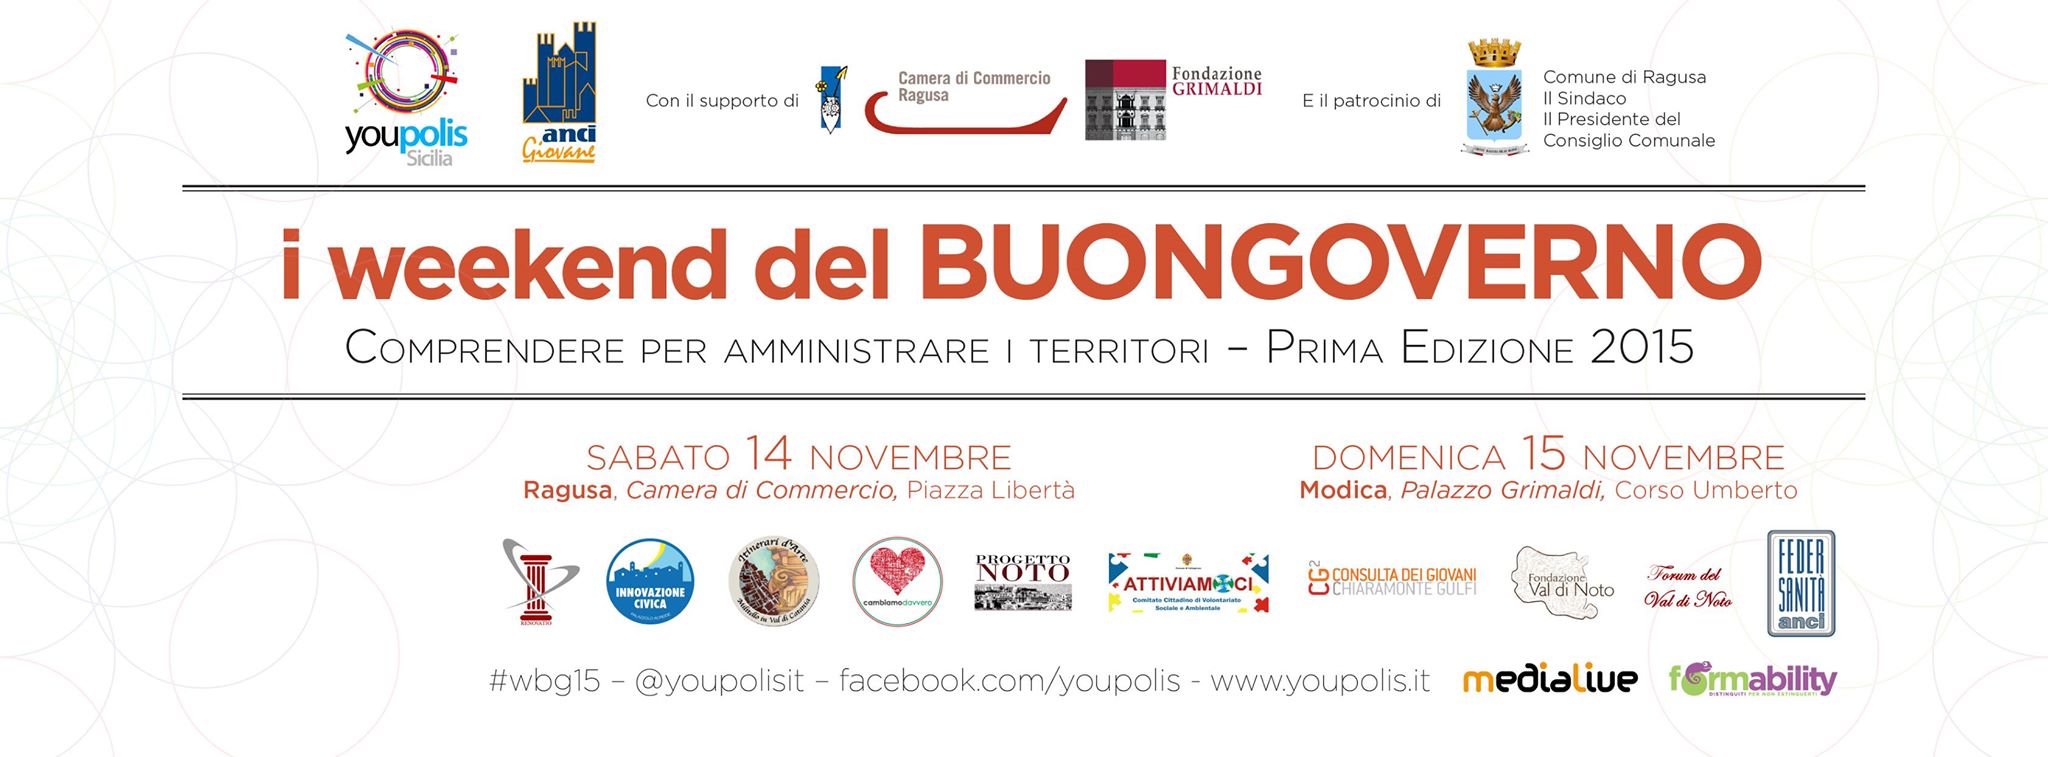  Youpolis e Anci Giovani presentano a Ragusa “I weekend del Buongoverno”